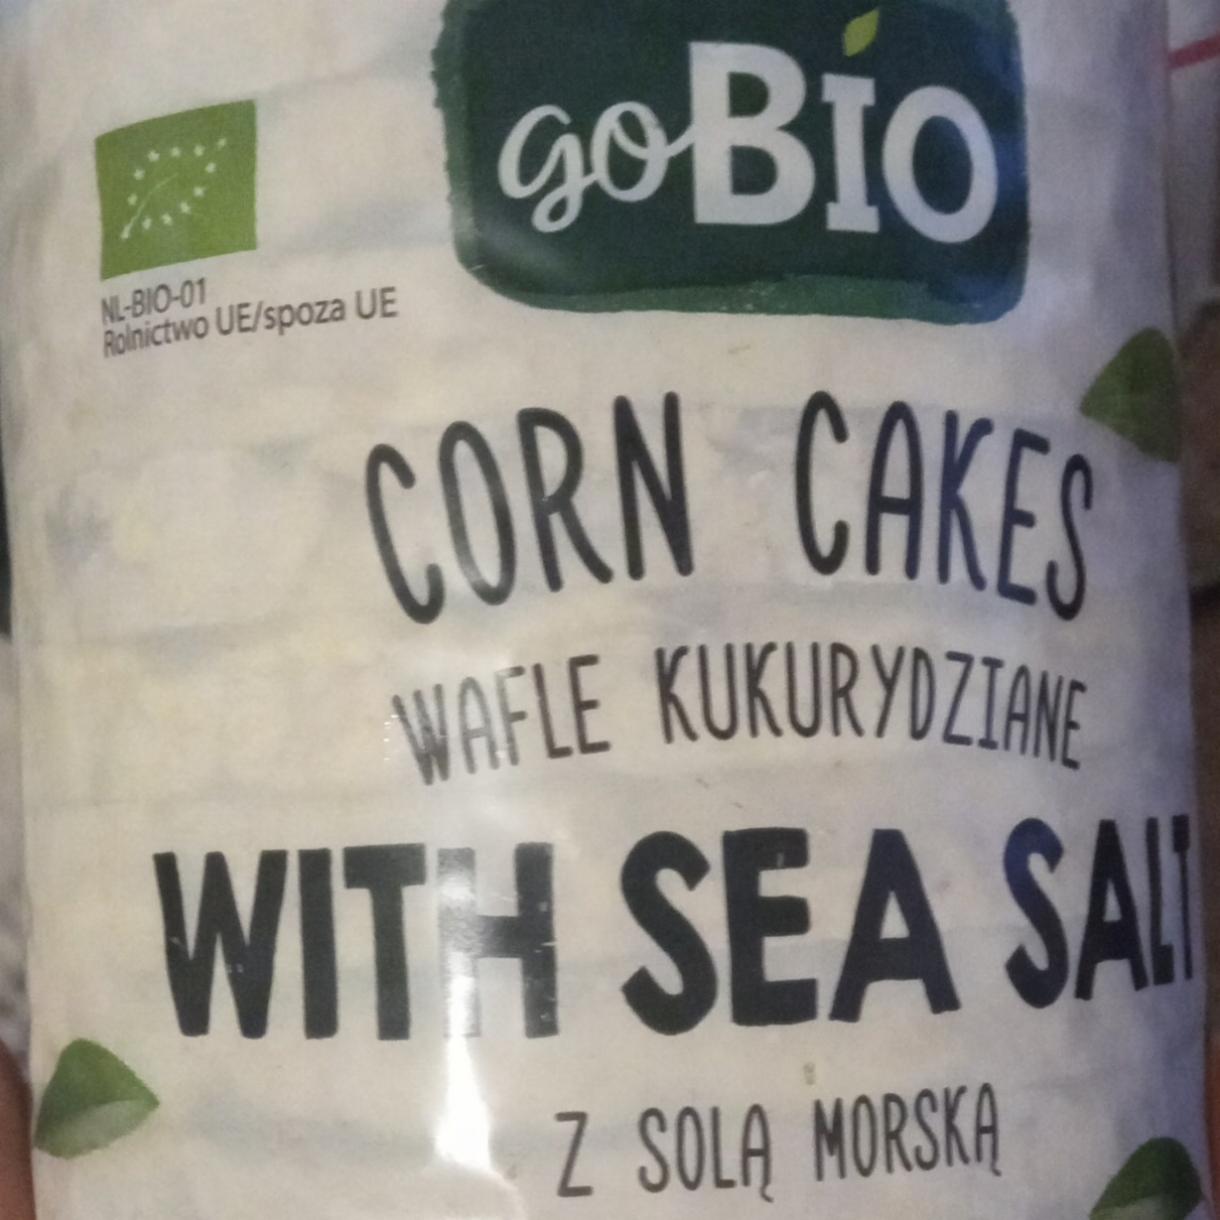 Fotografie - gobio corn cakes with sea salt